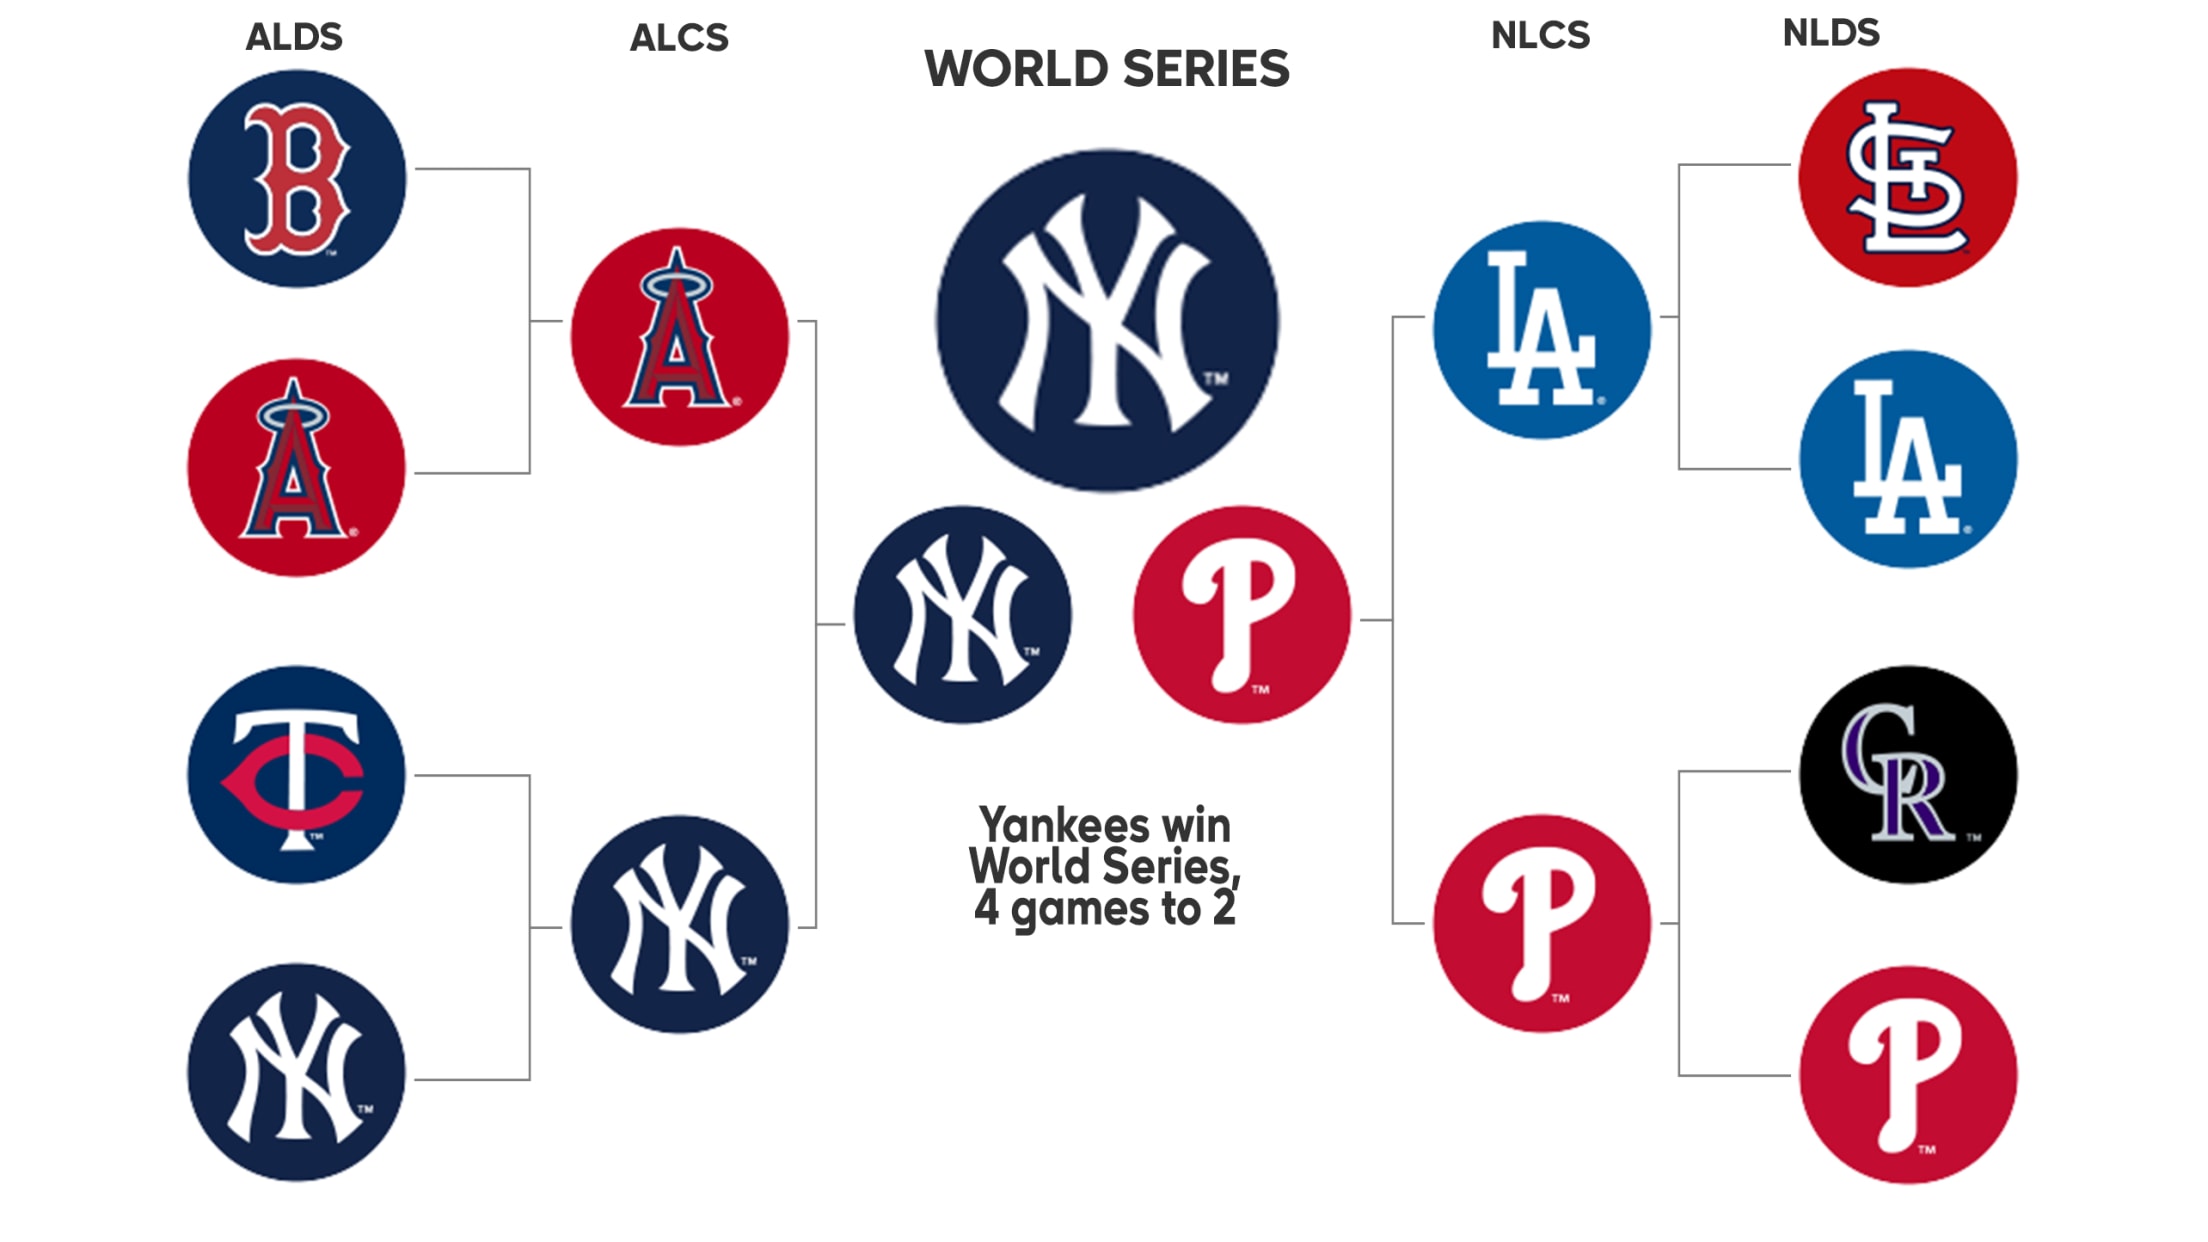 MLB postseason picture, final baseball standings: Red Sox, Yankees